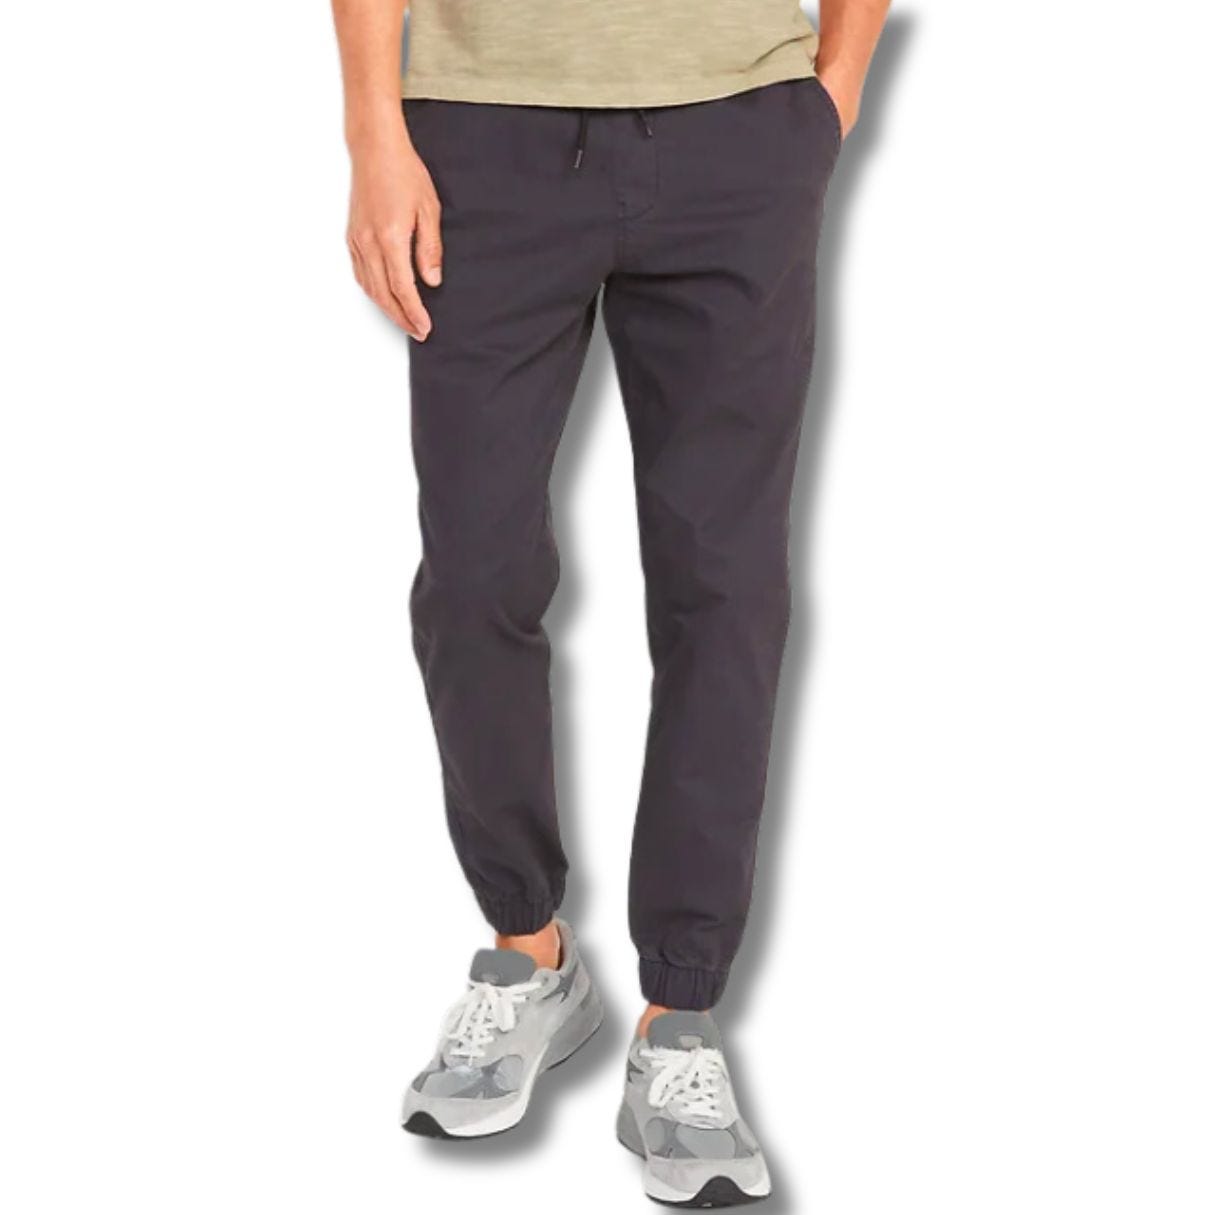 Brown jogger pants | HOWTOWEAR Fashion